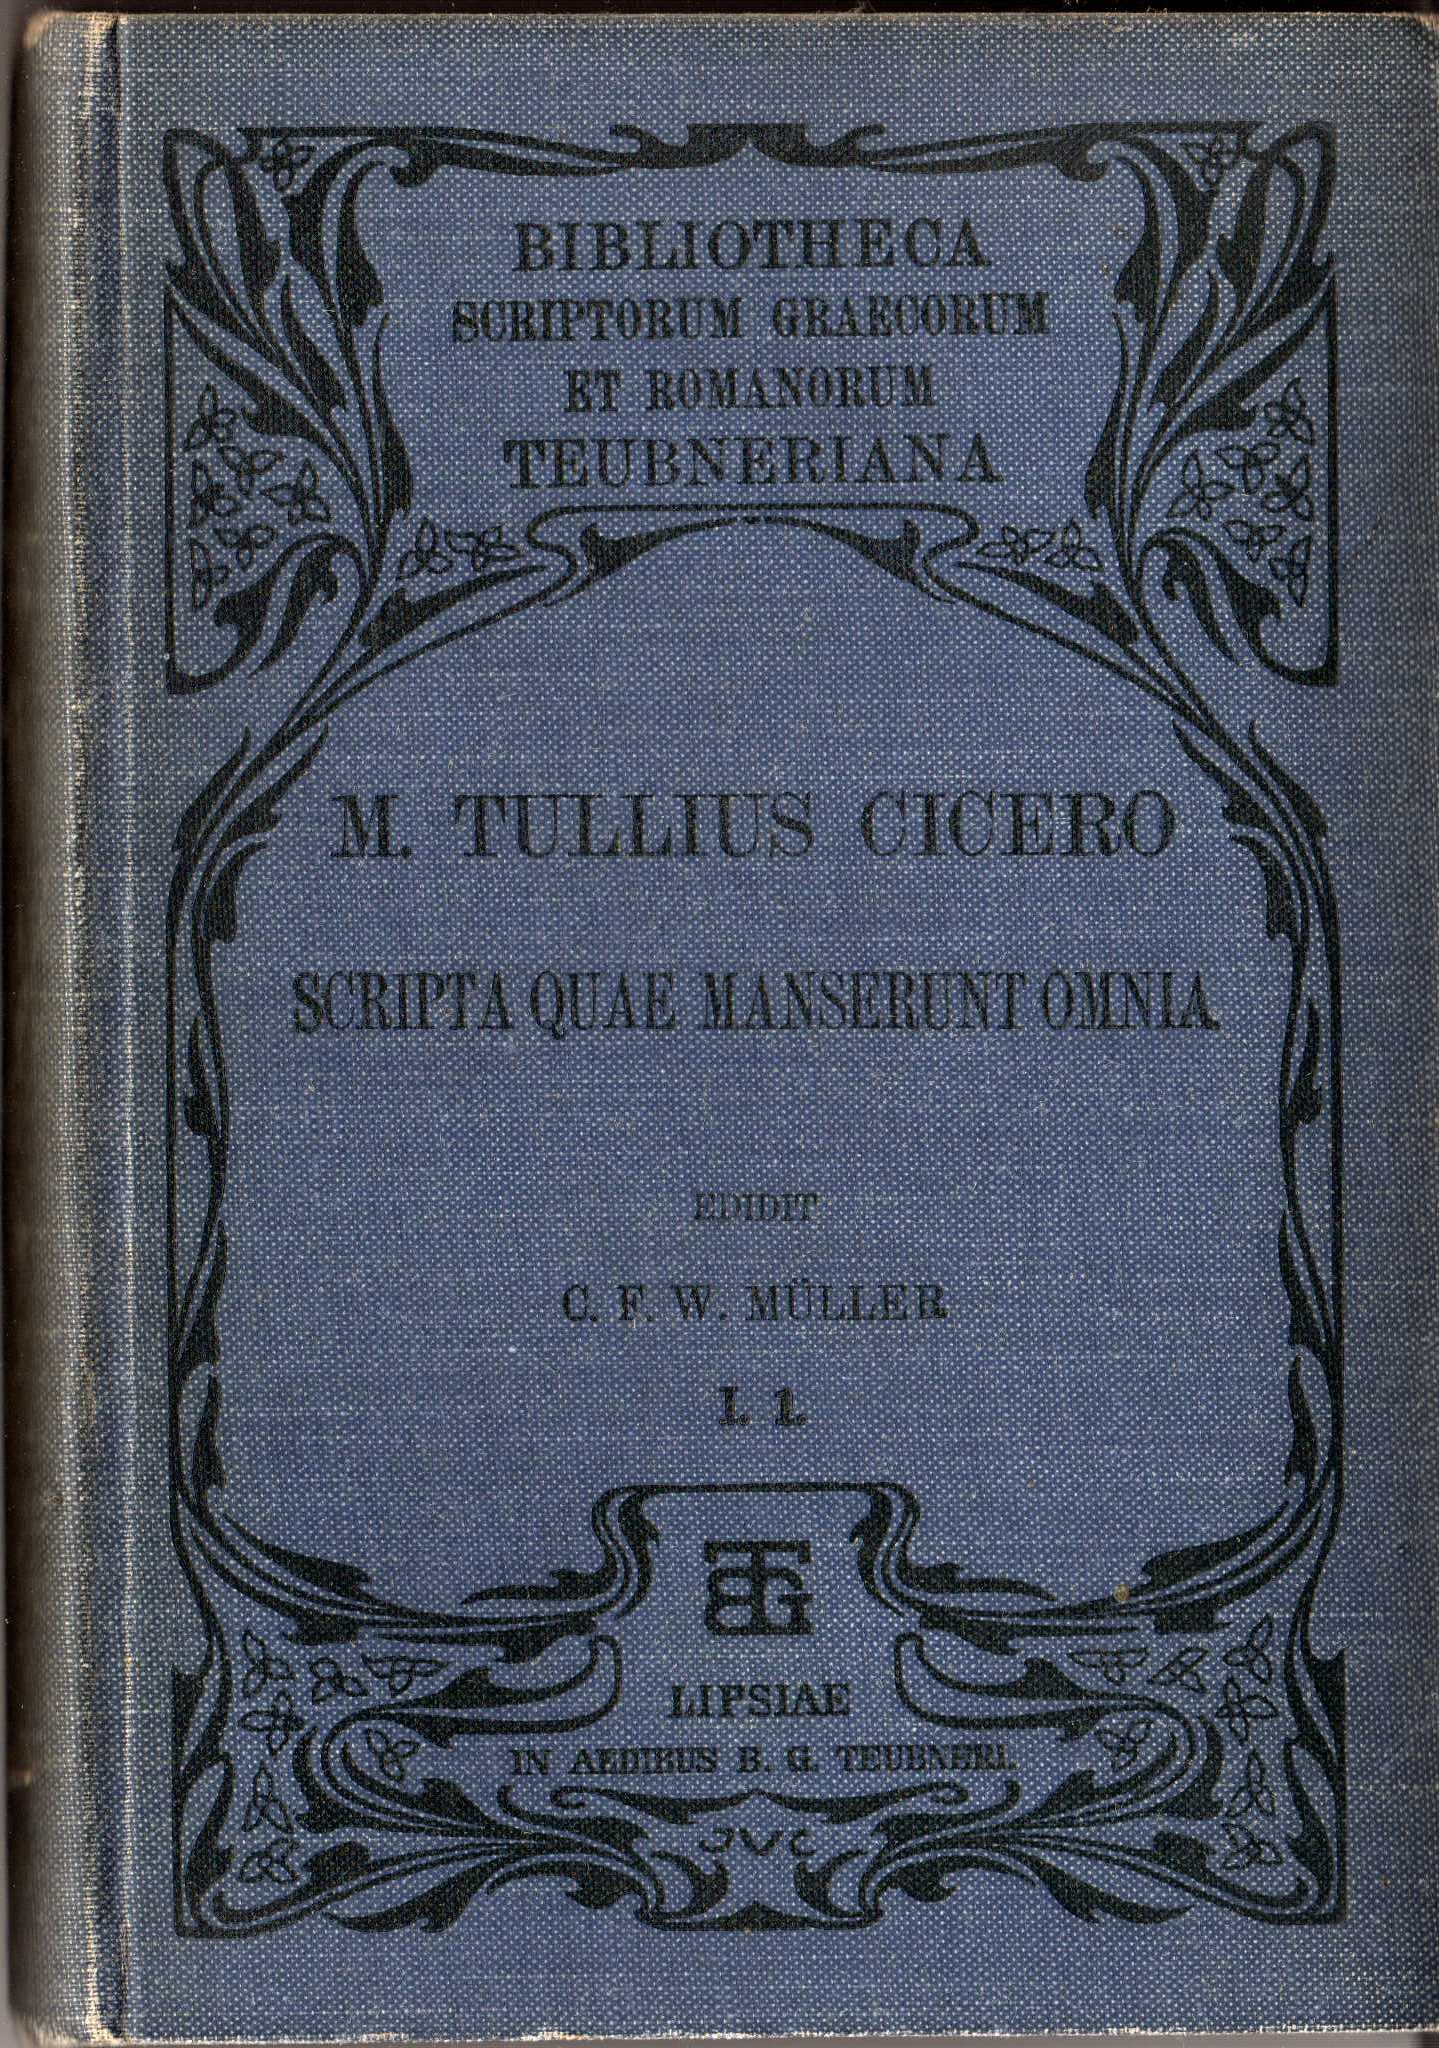 Teubner Cicero 1908.jpg